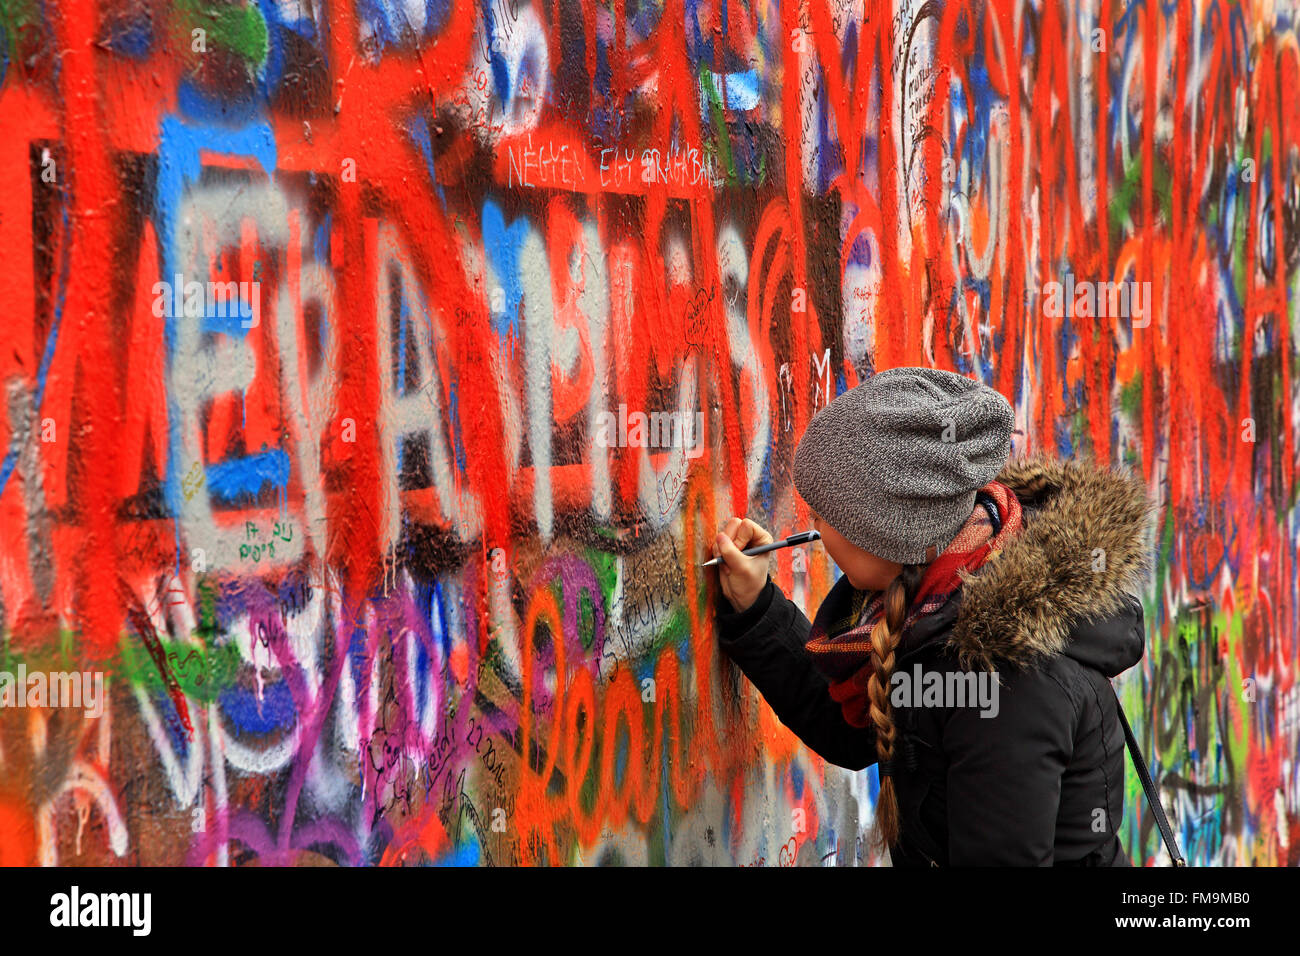 The 'John Lennon wall', Mala Strana ('little quarter'), Prague, Czech Republic. Stock Photo